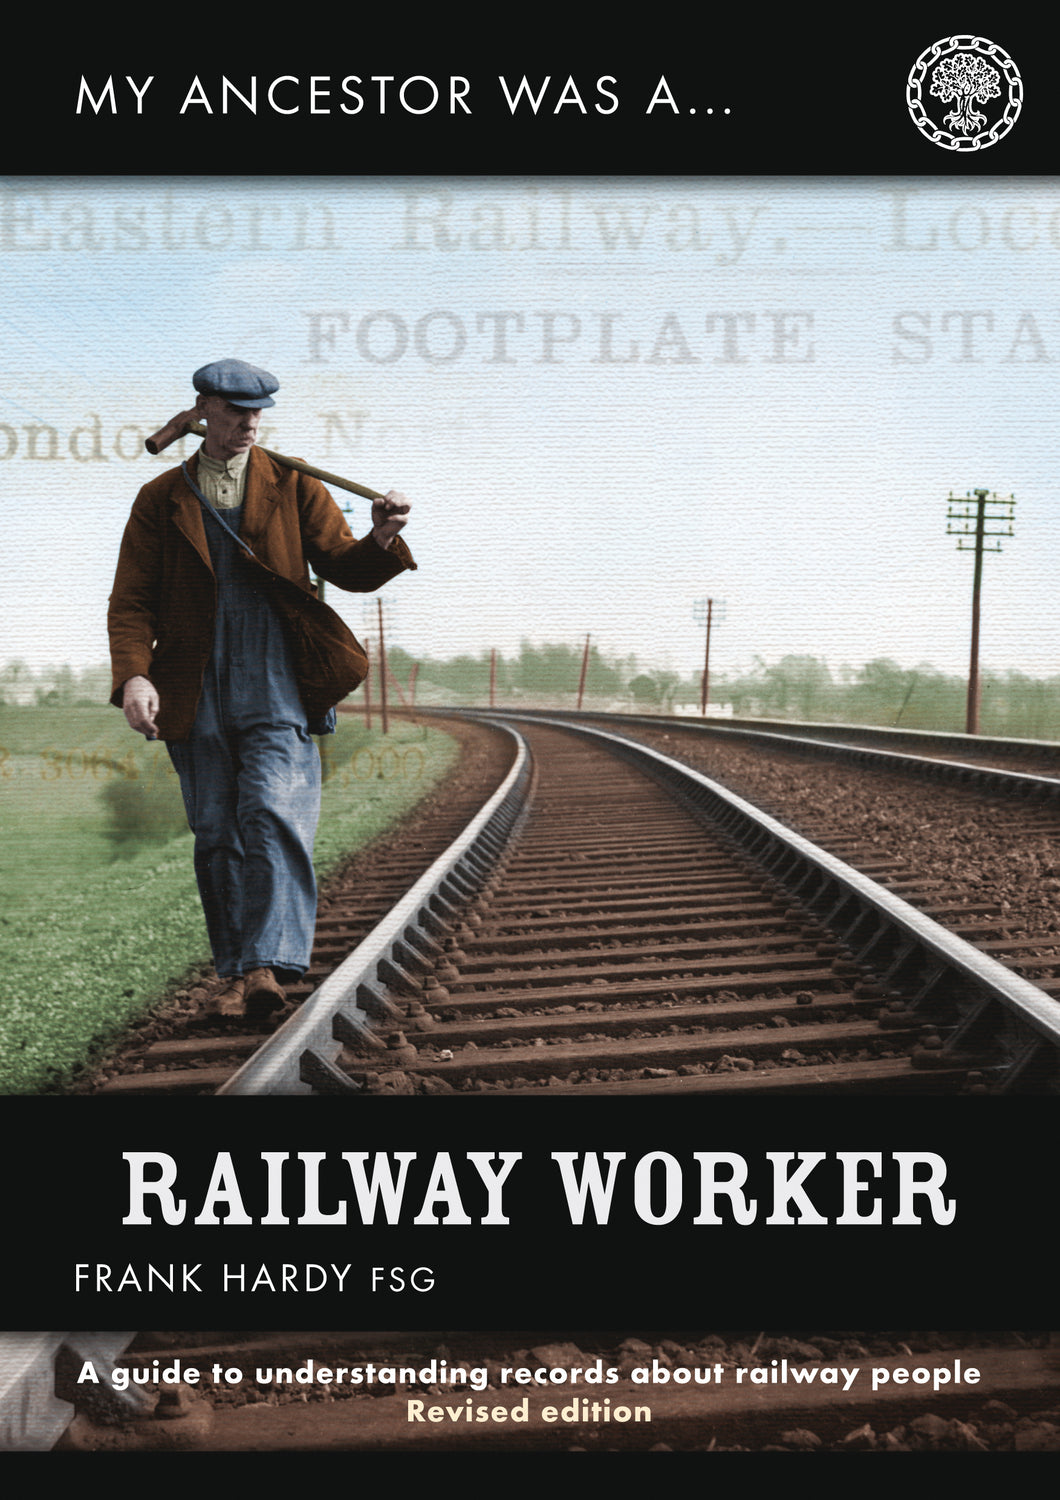 My Ancestor was a Railway Worker